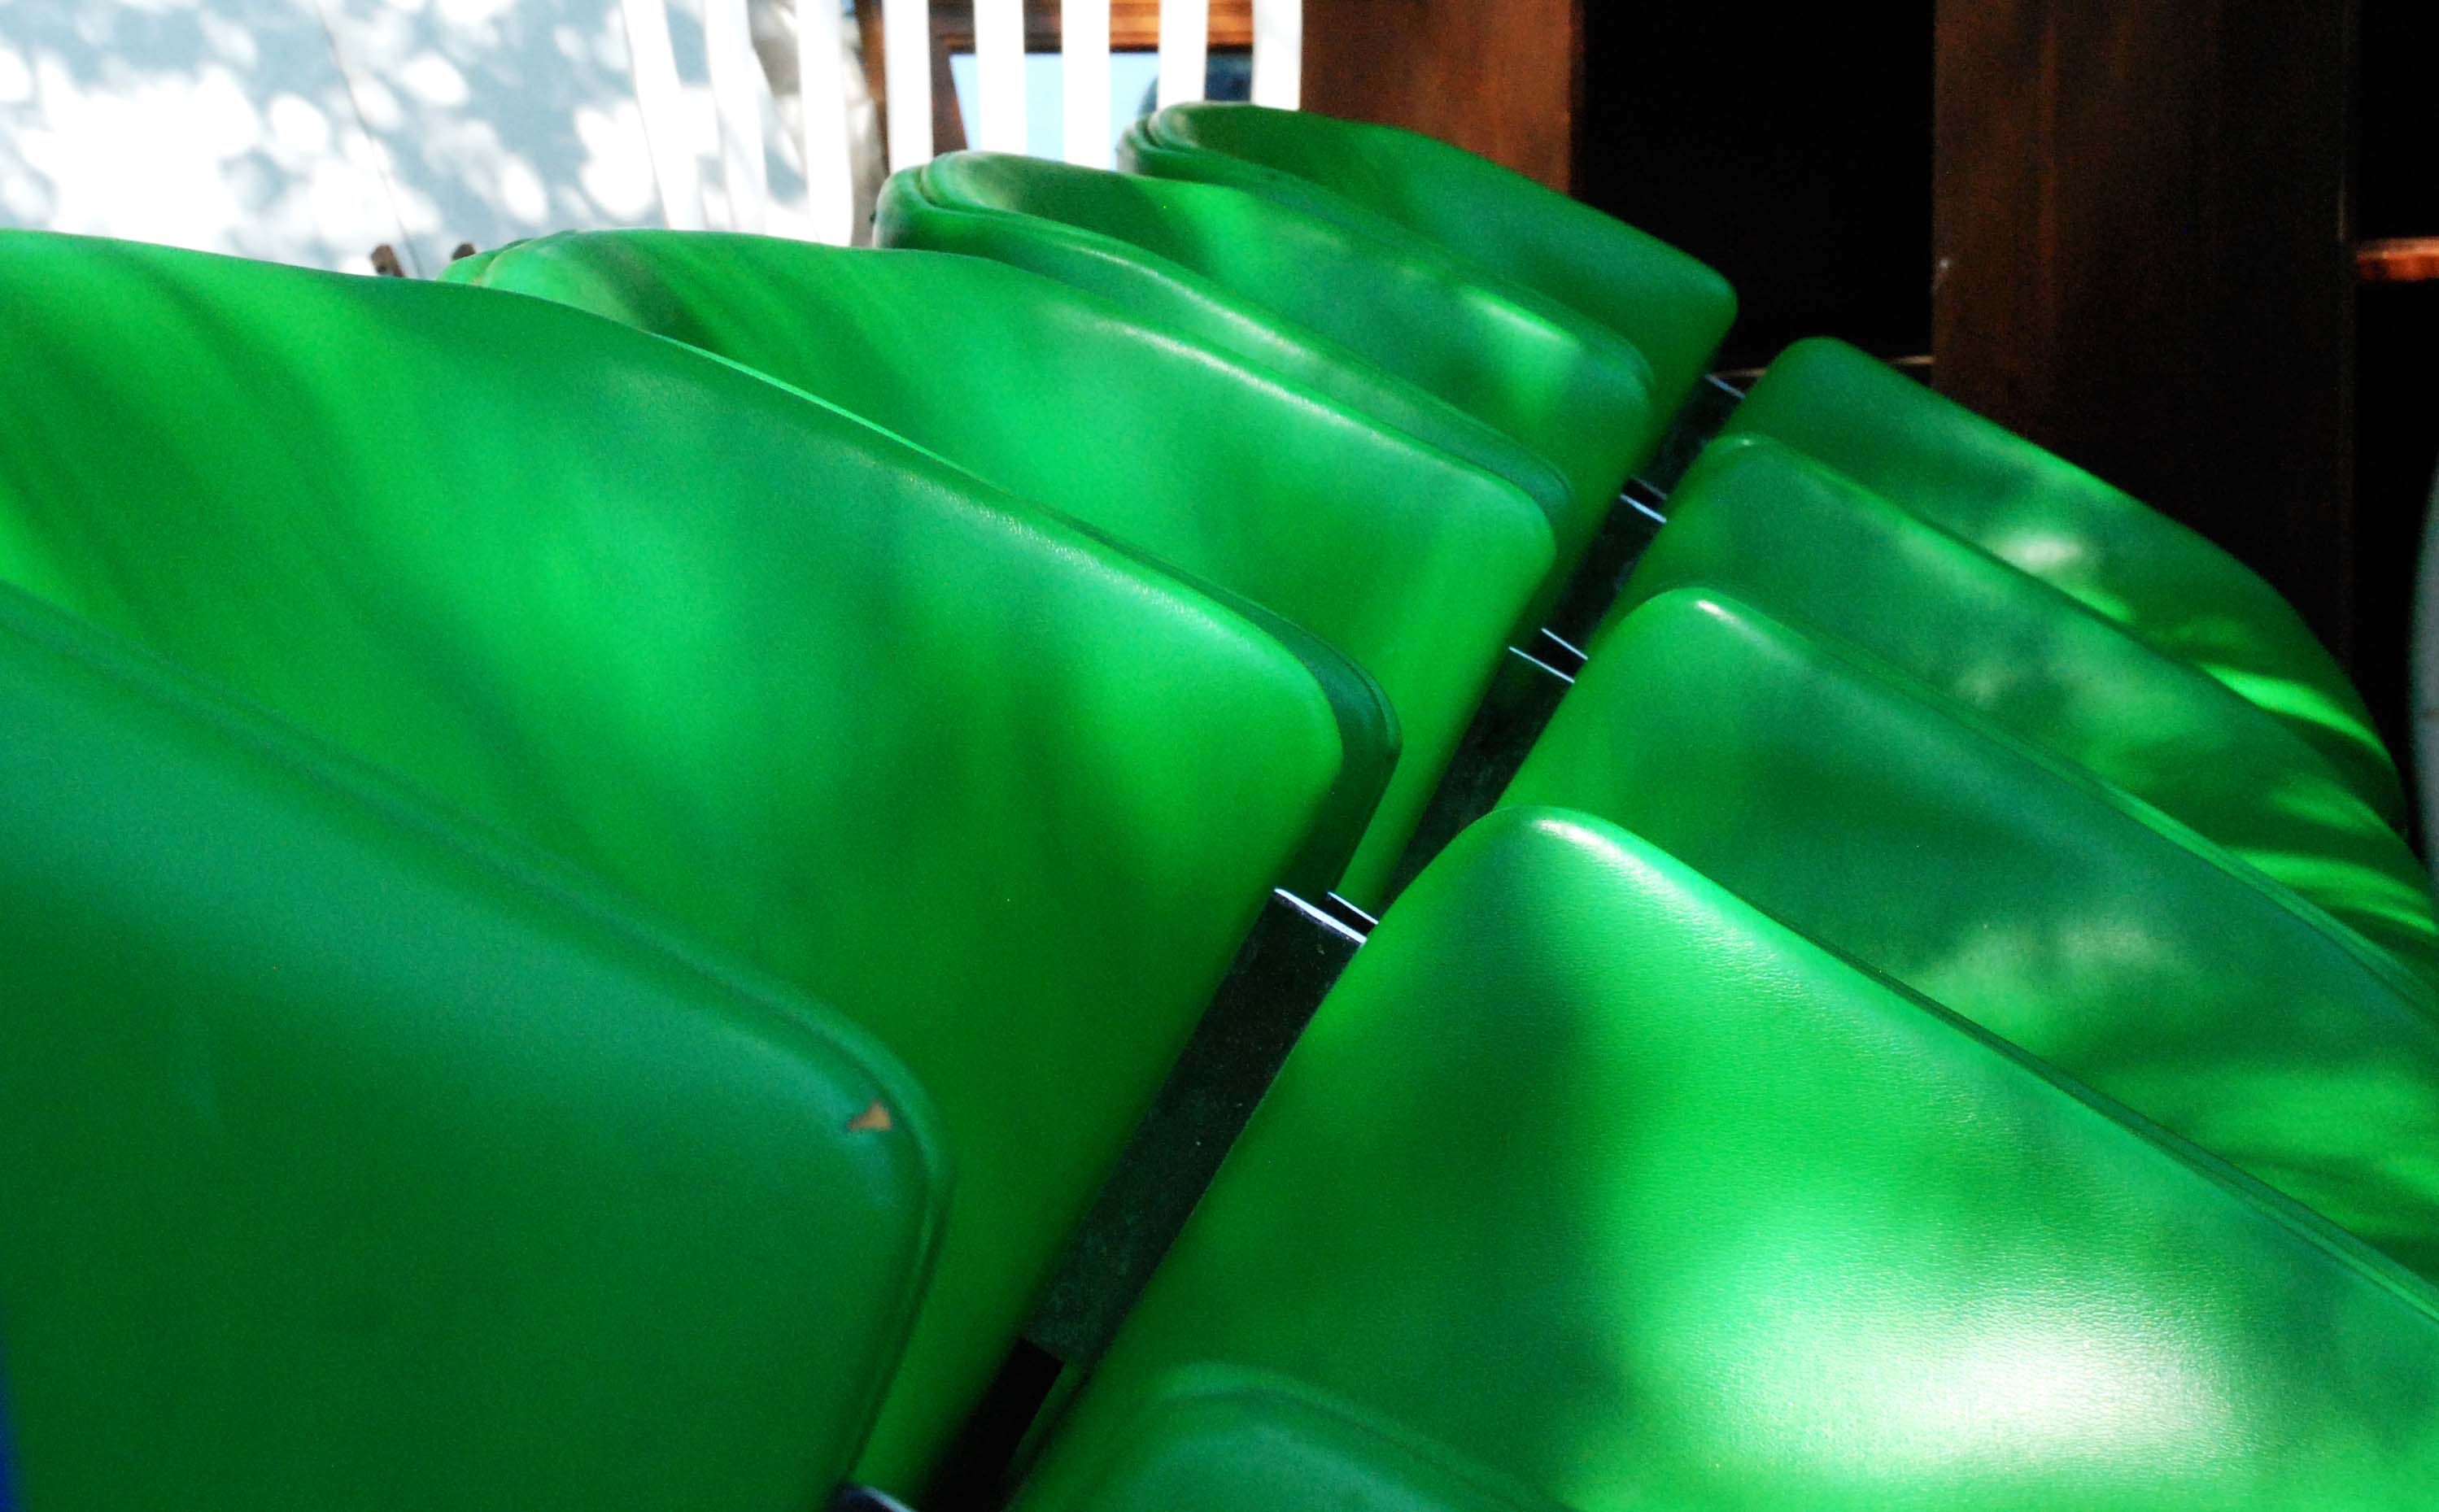 flea modern green chairs